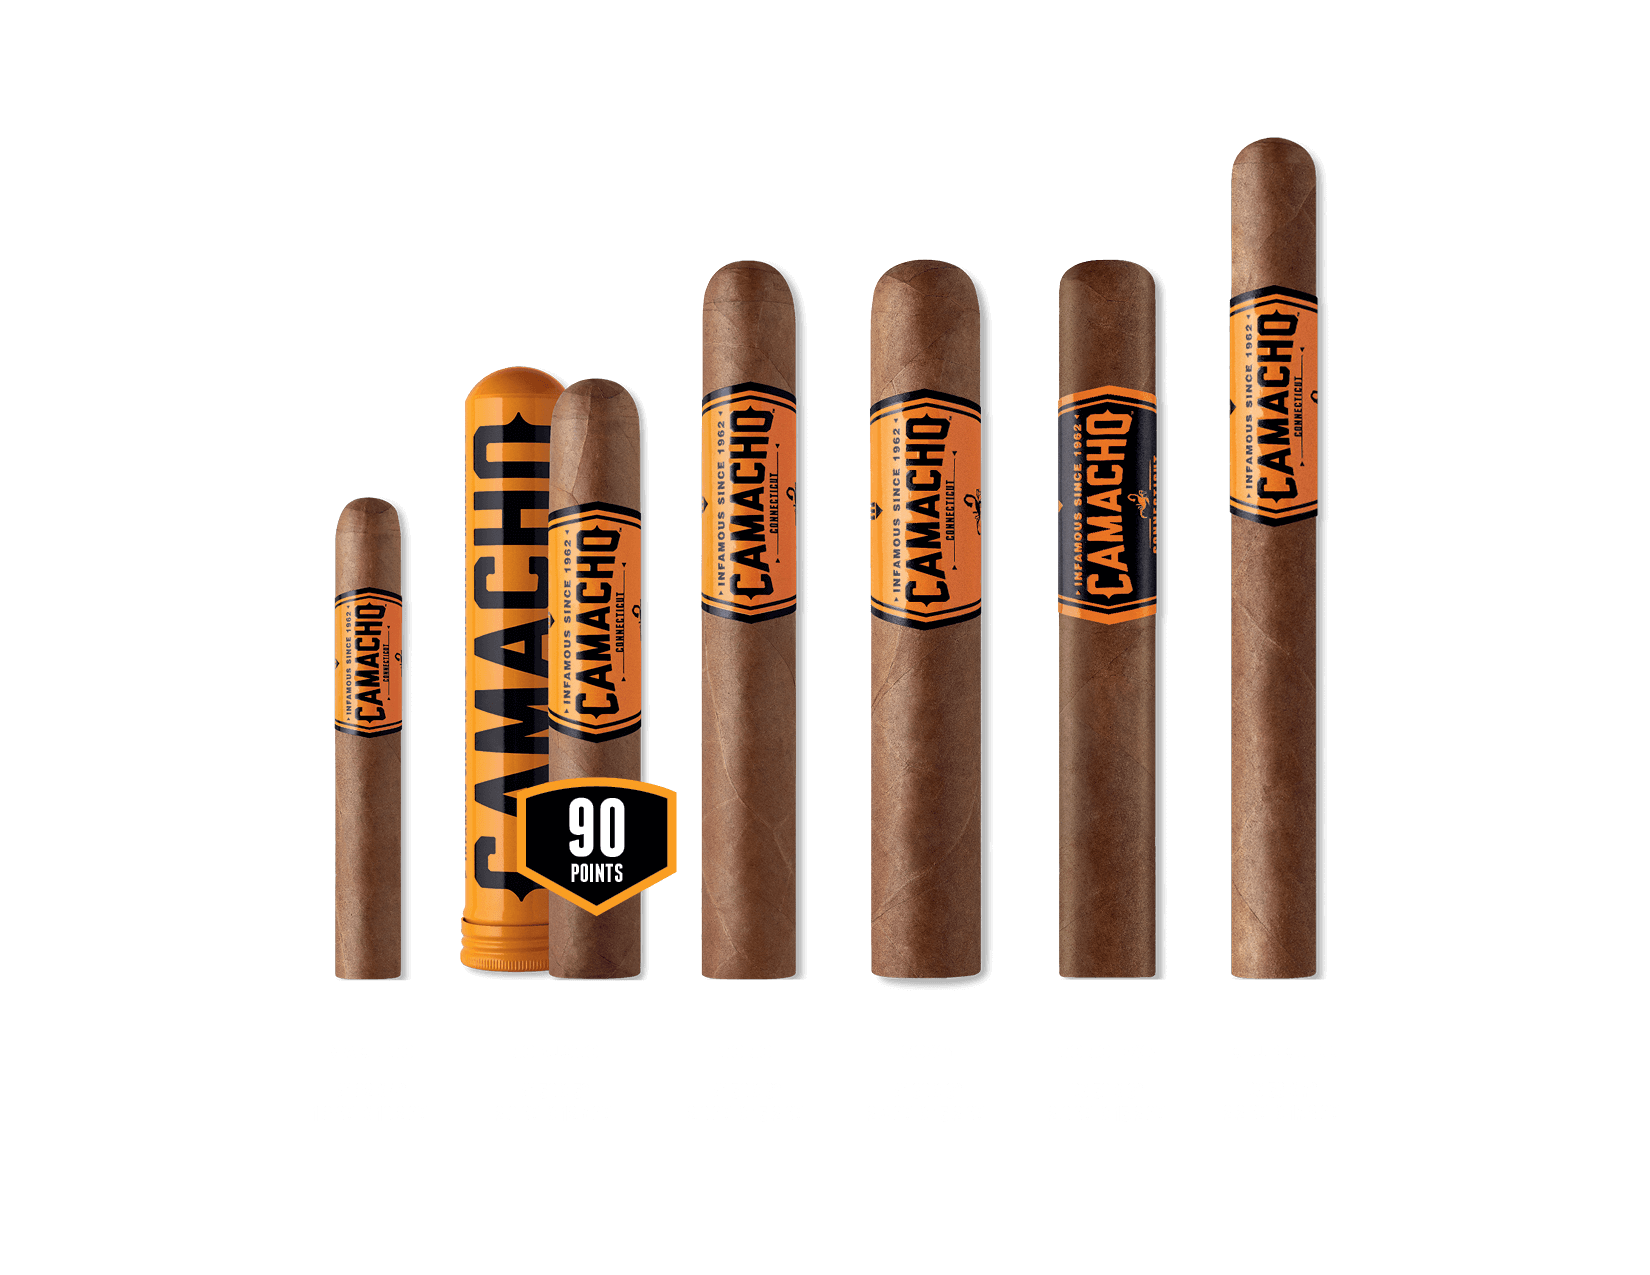 Camacho Connecticut cigar lineup